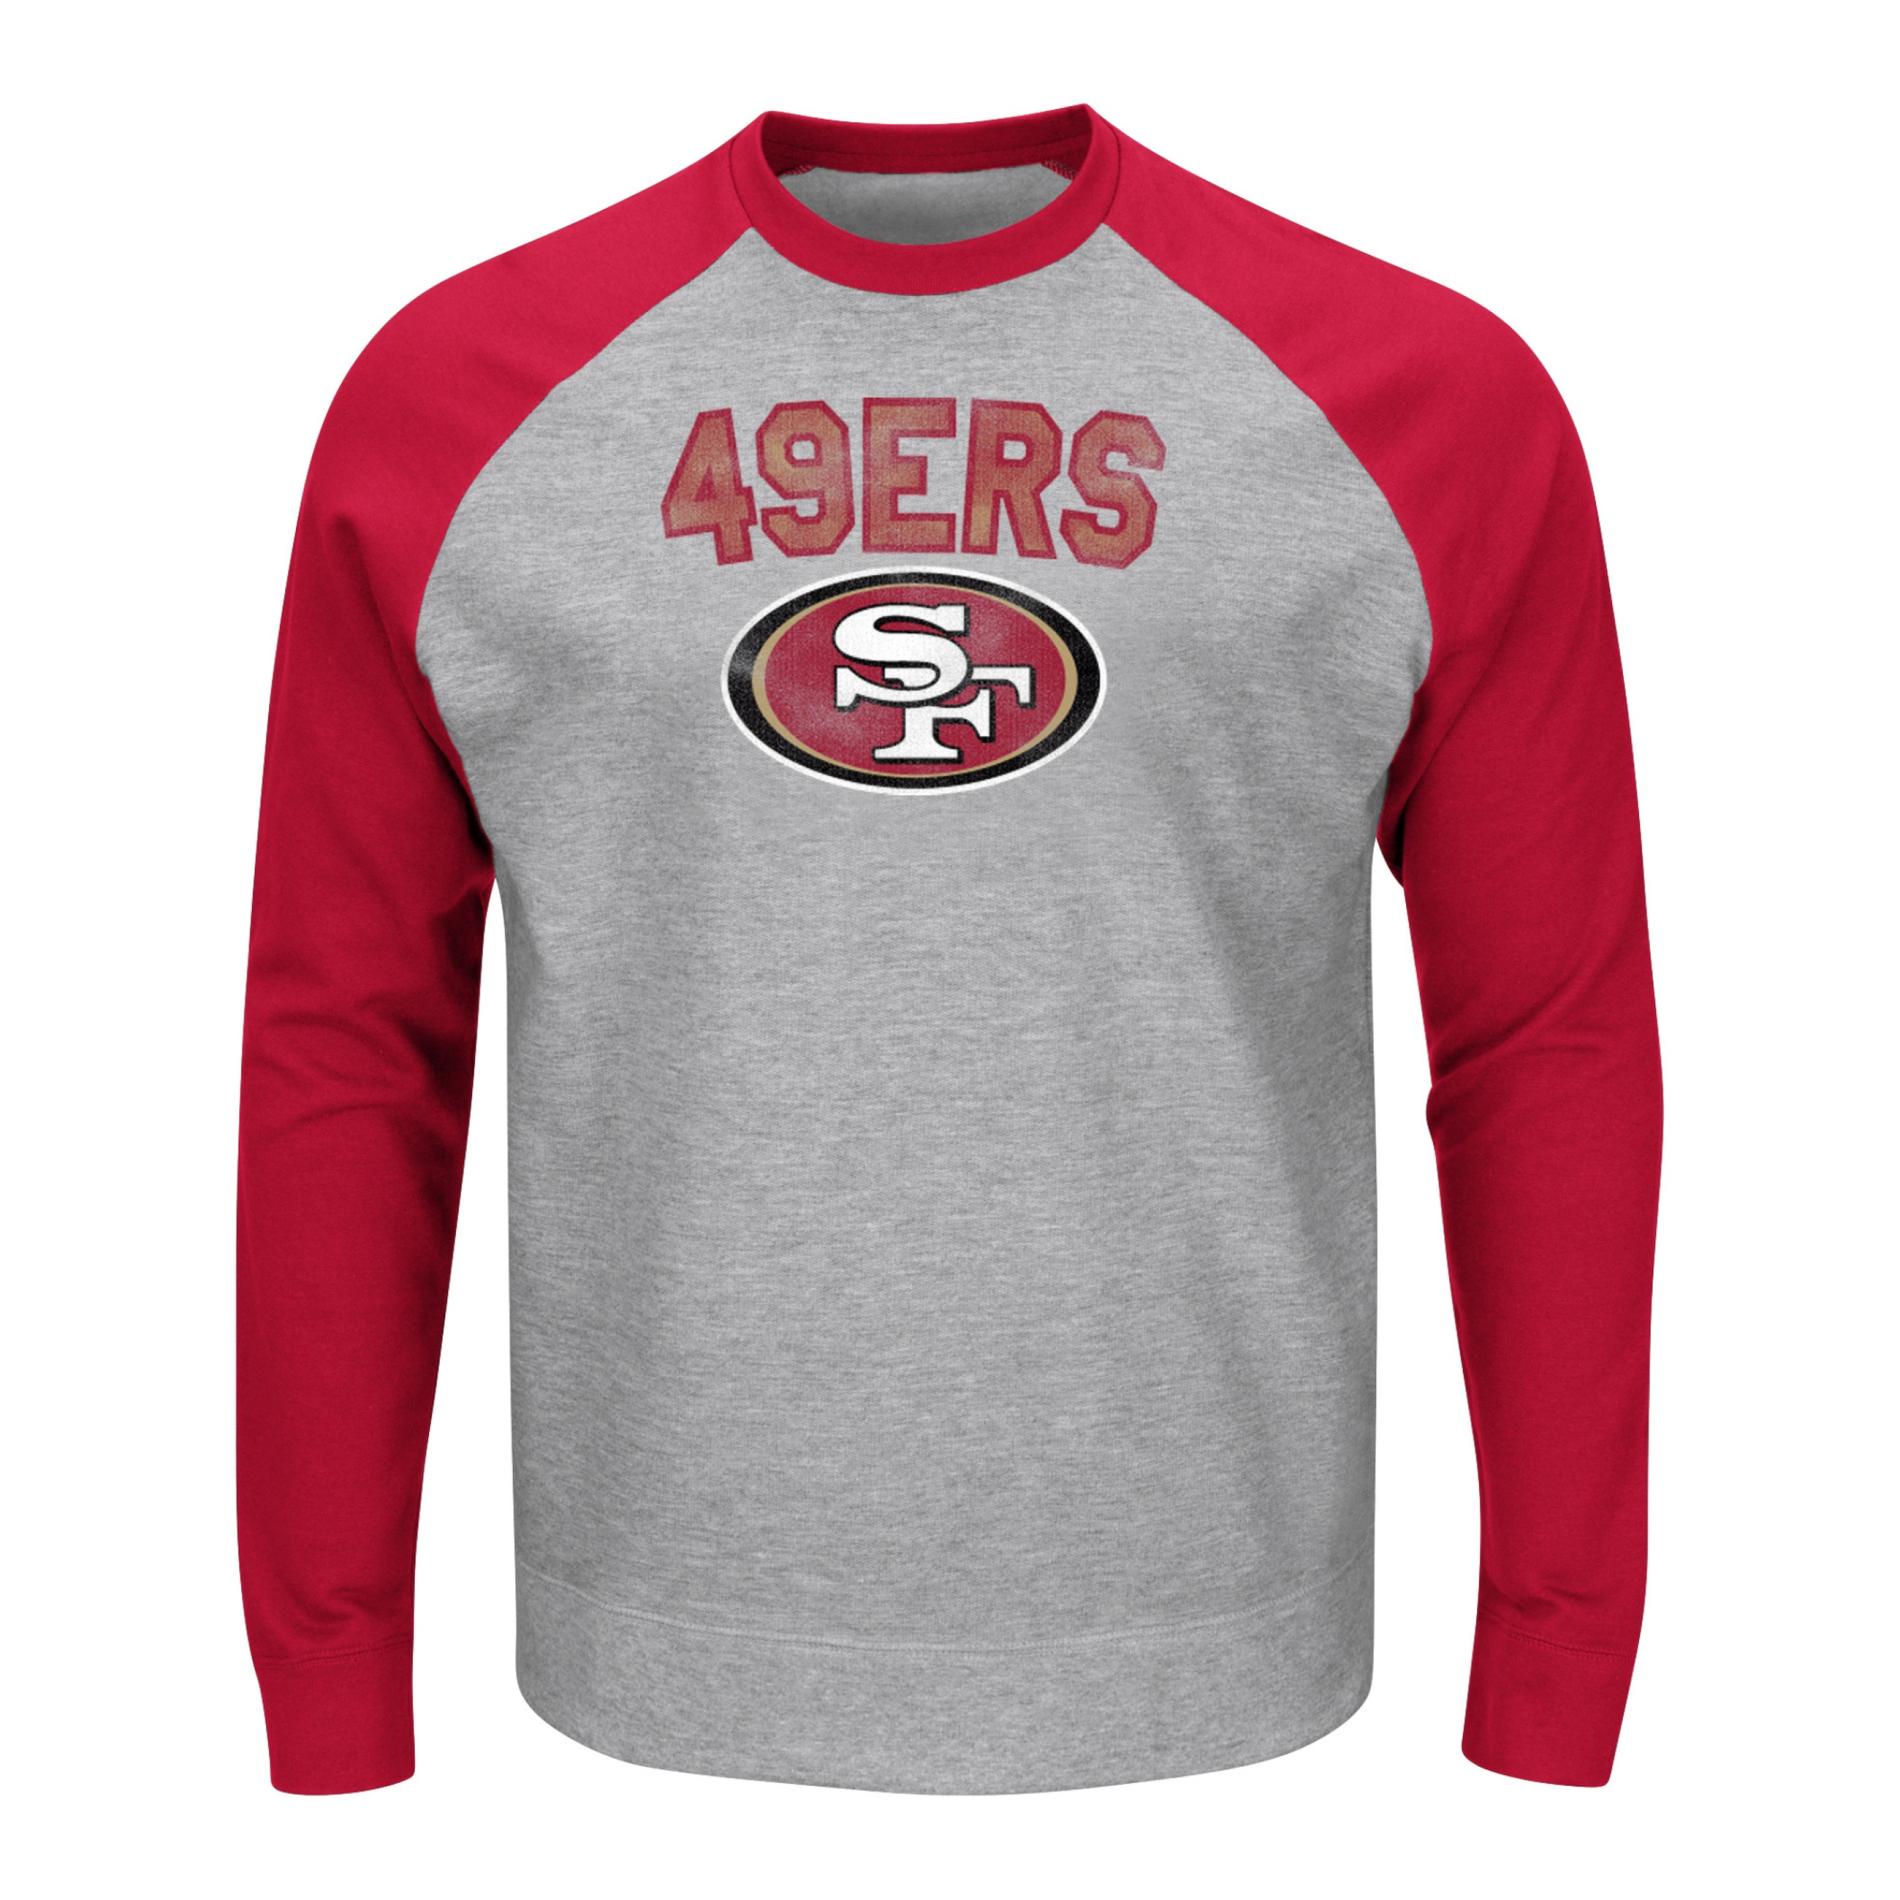 NFL Men's Long-Sleeve Shirt - San Francisco 49ers